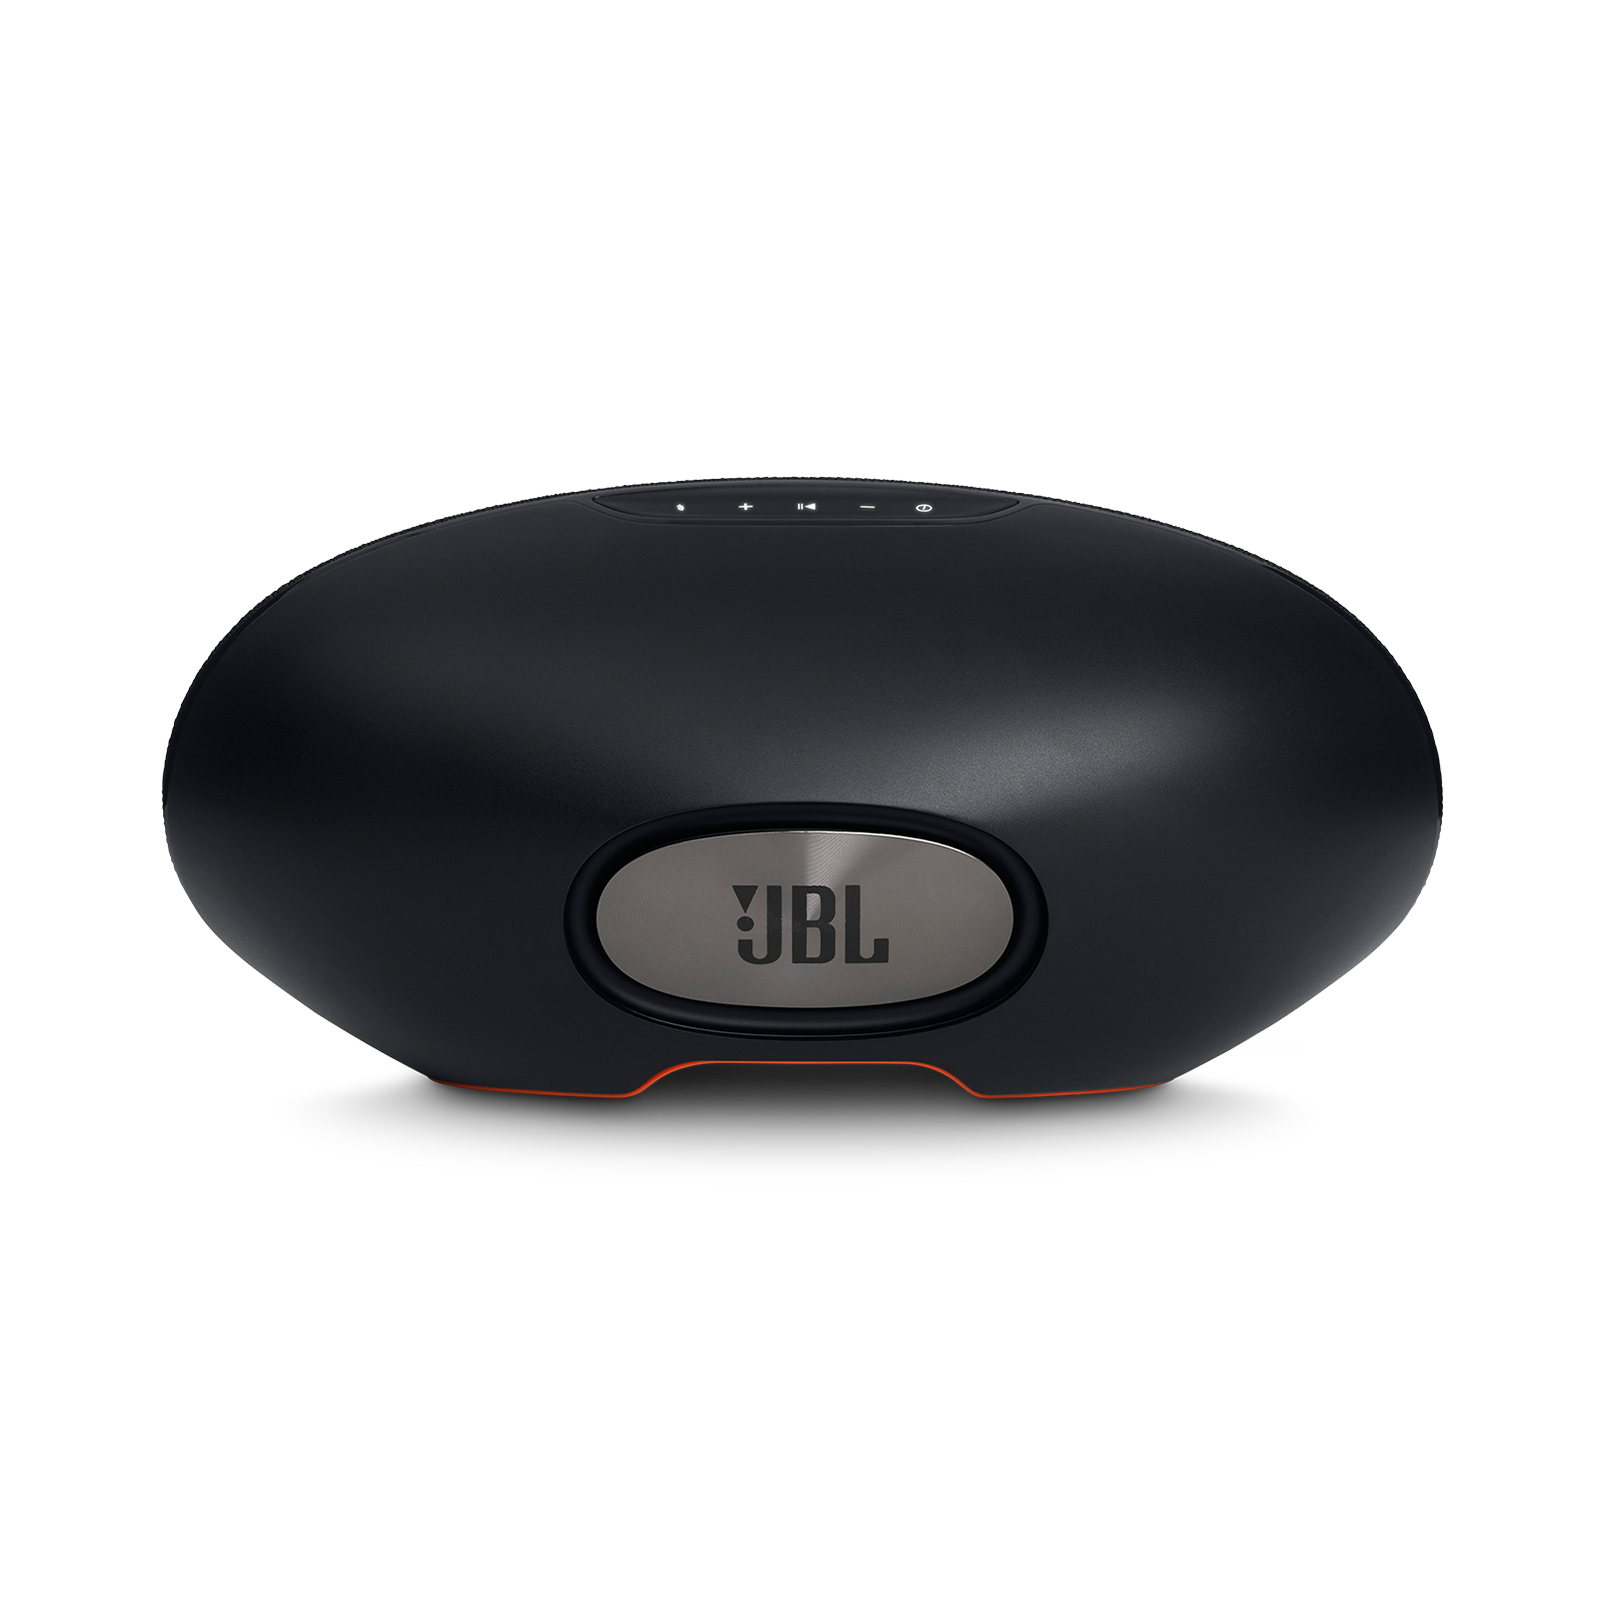 JBL Playlist - Black - Wireless speaker with Chromecast built-in - Back